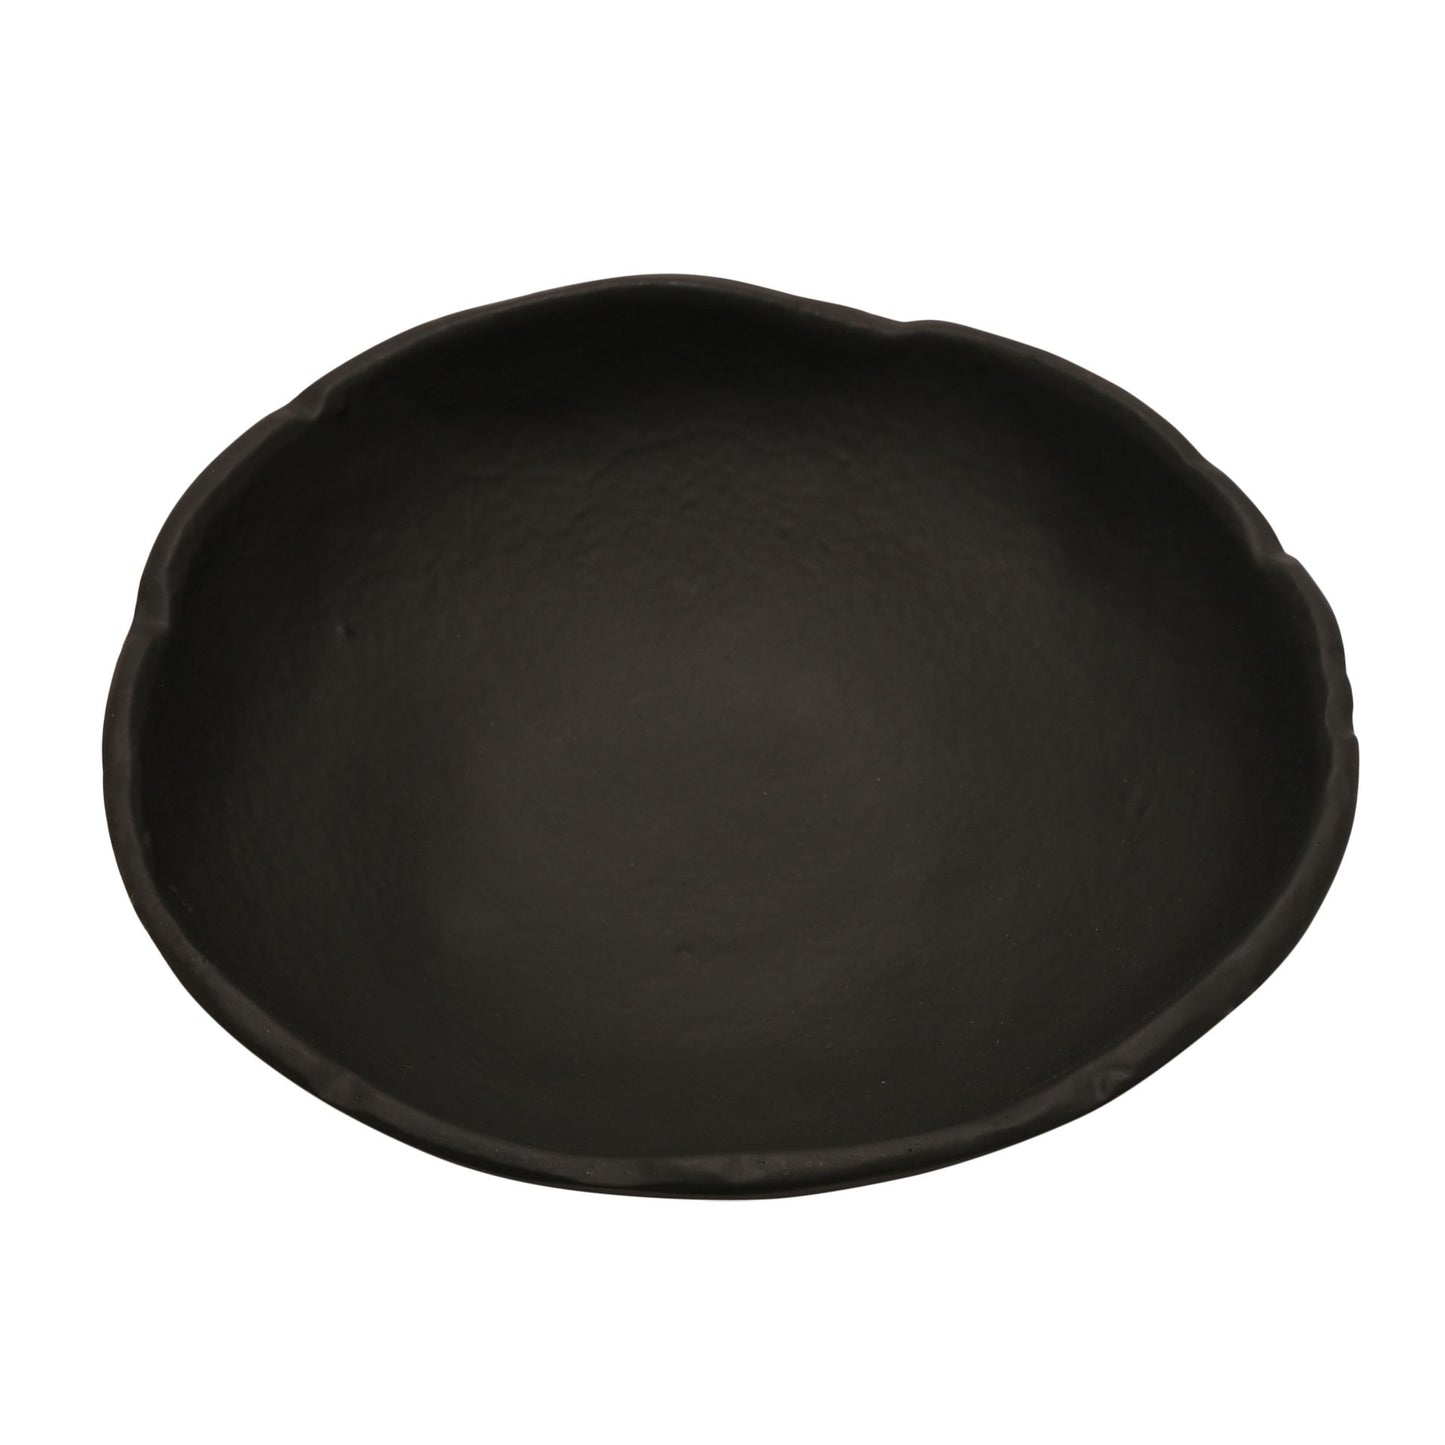 Textured Black Decorative Bowl